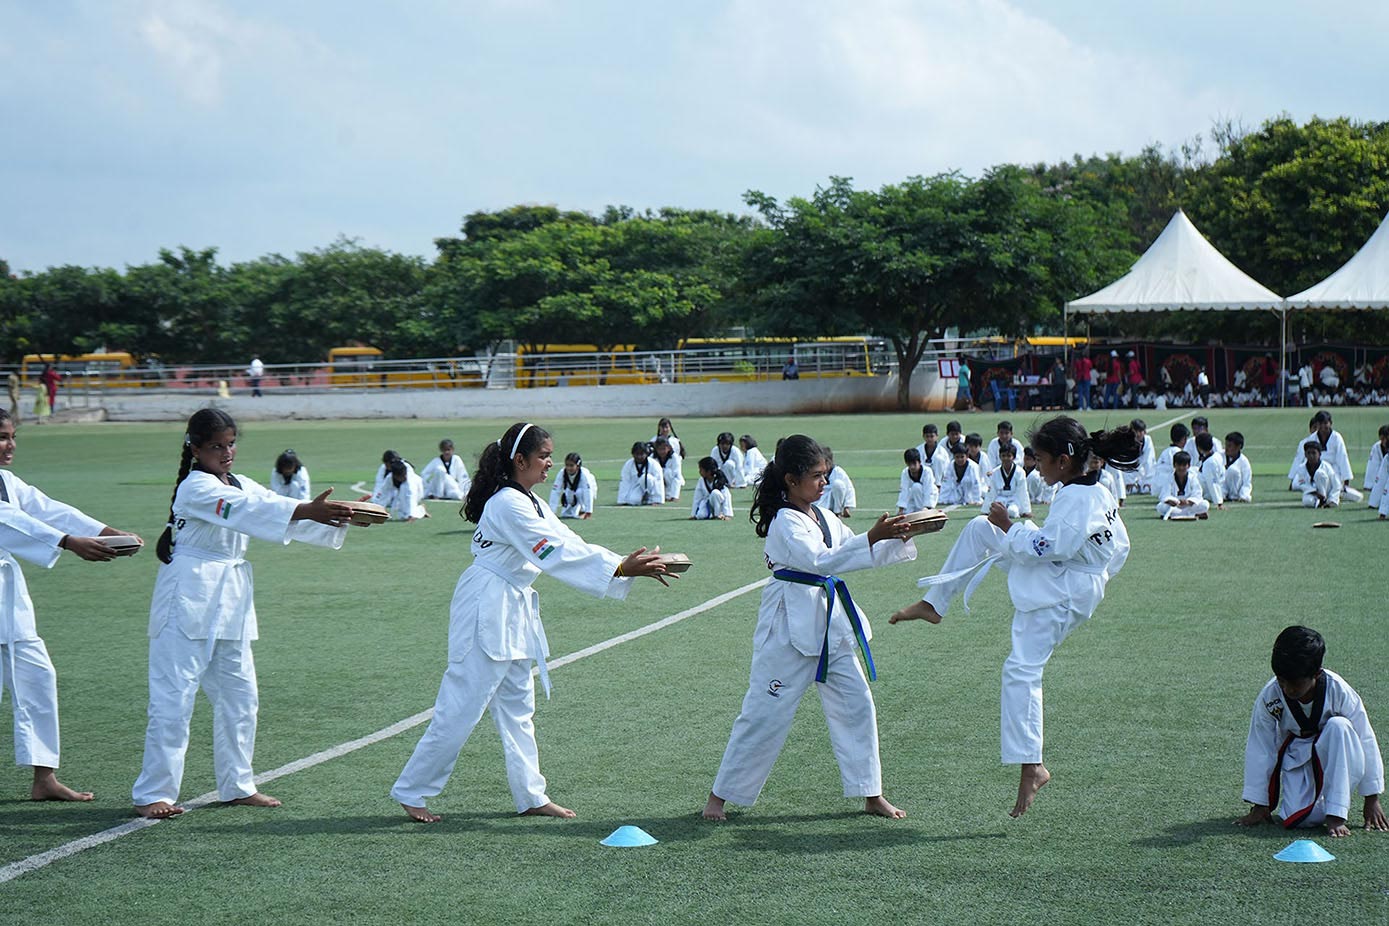 Primary Sports Day 2022 - Taekwondo | Top CBSE School in Coimbatore.